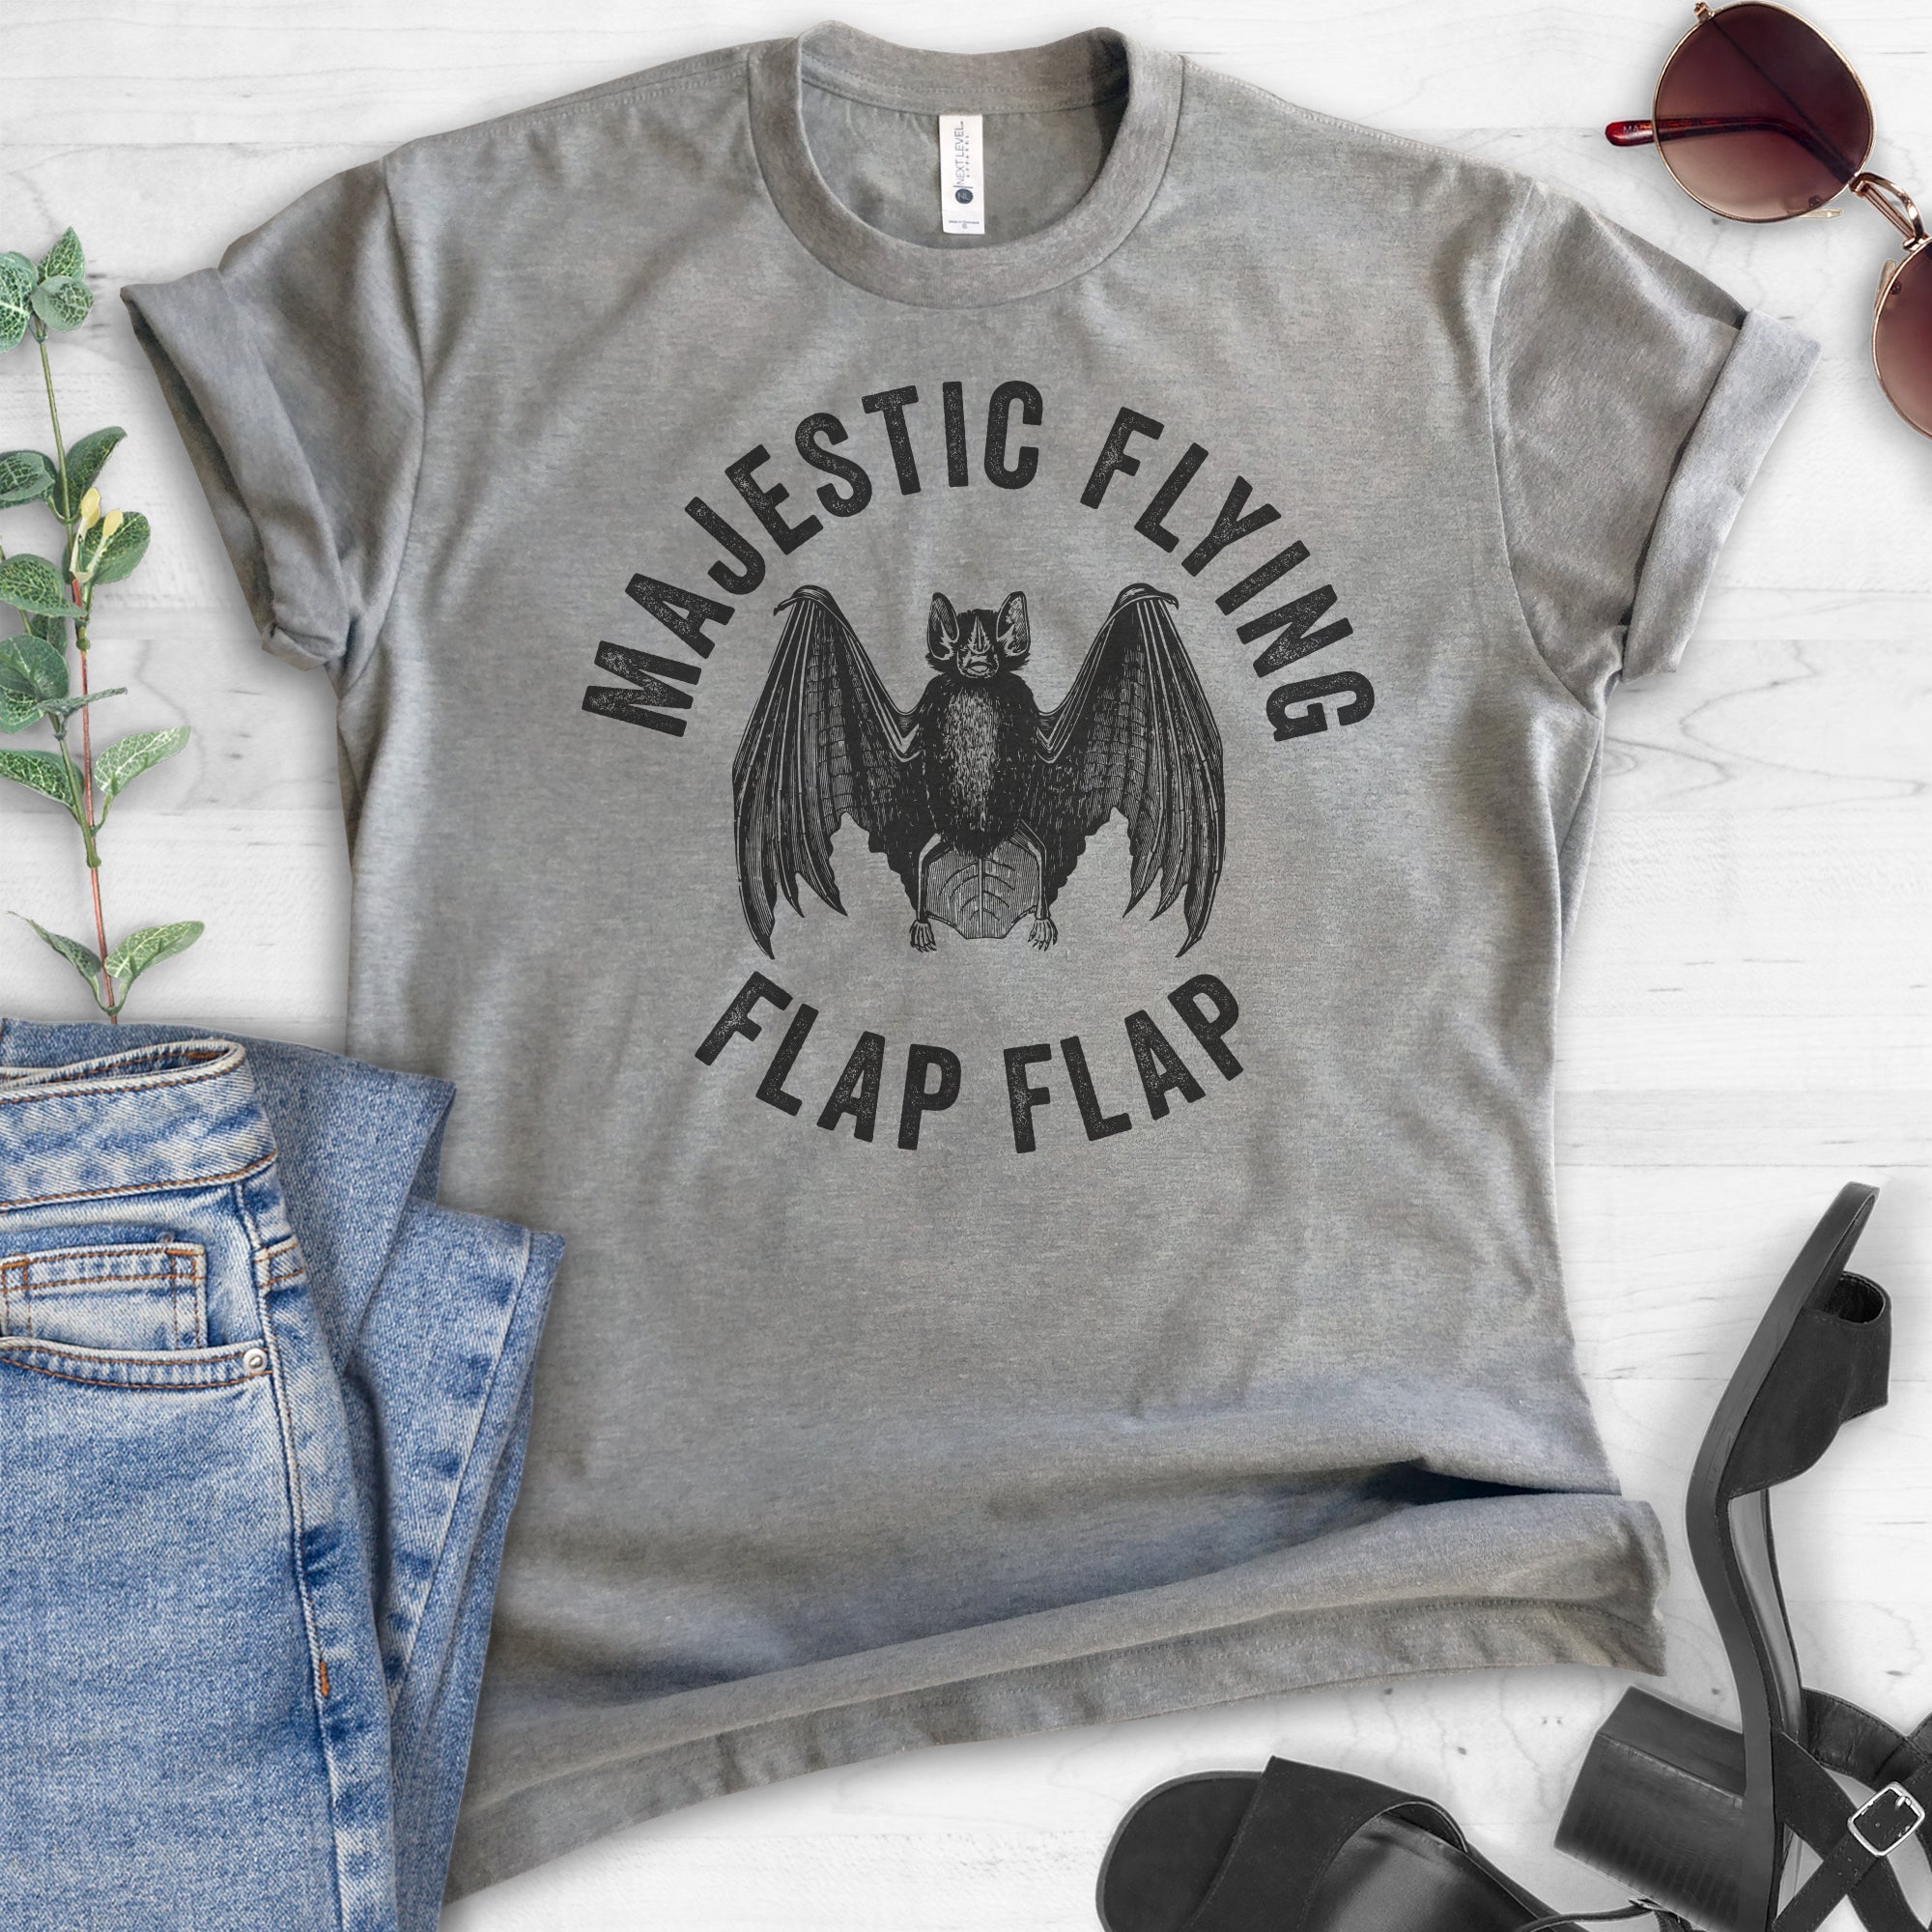 Majestic Flying Flap Flap T-shirt